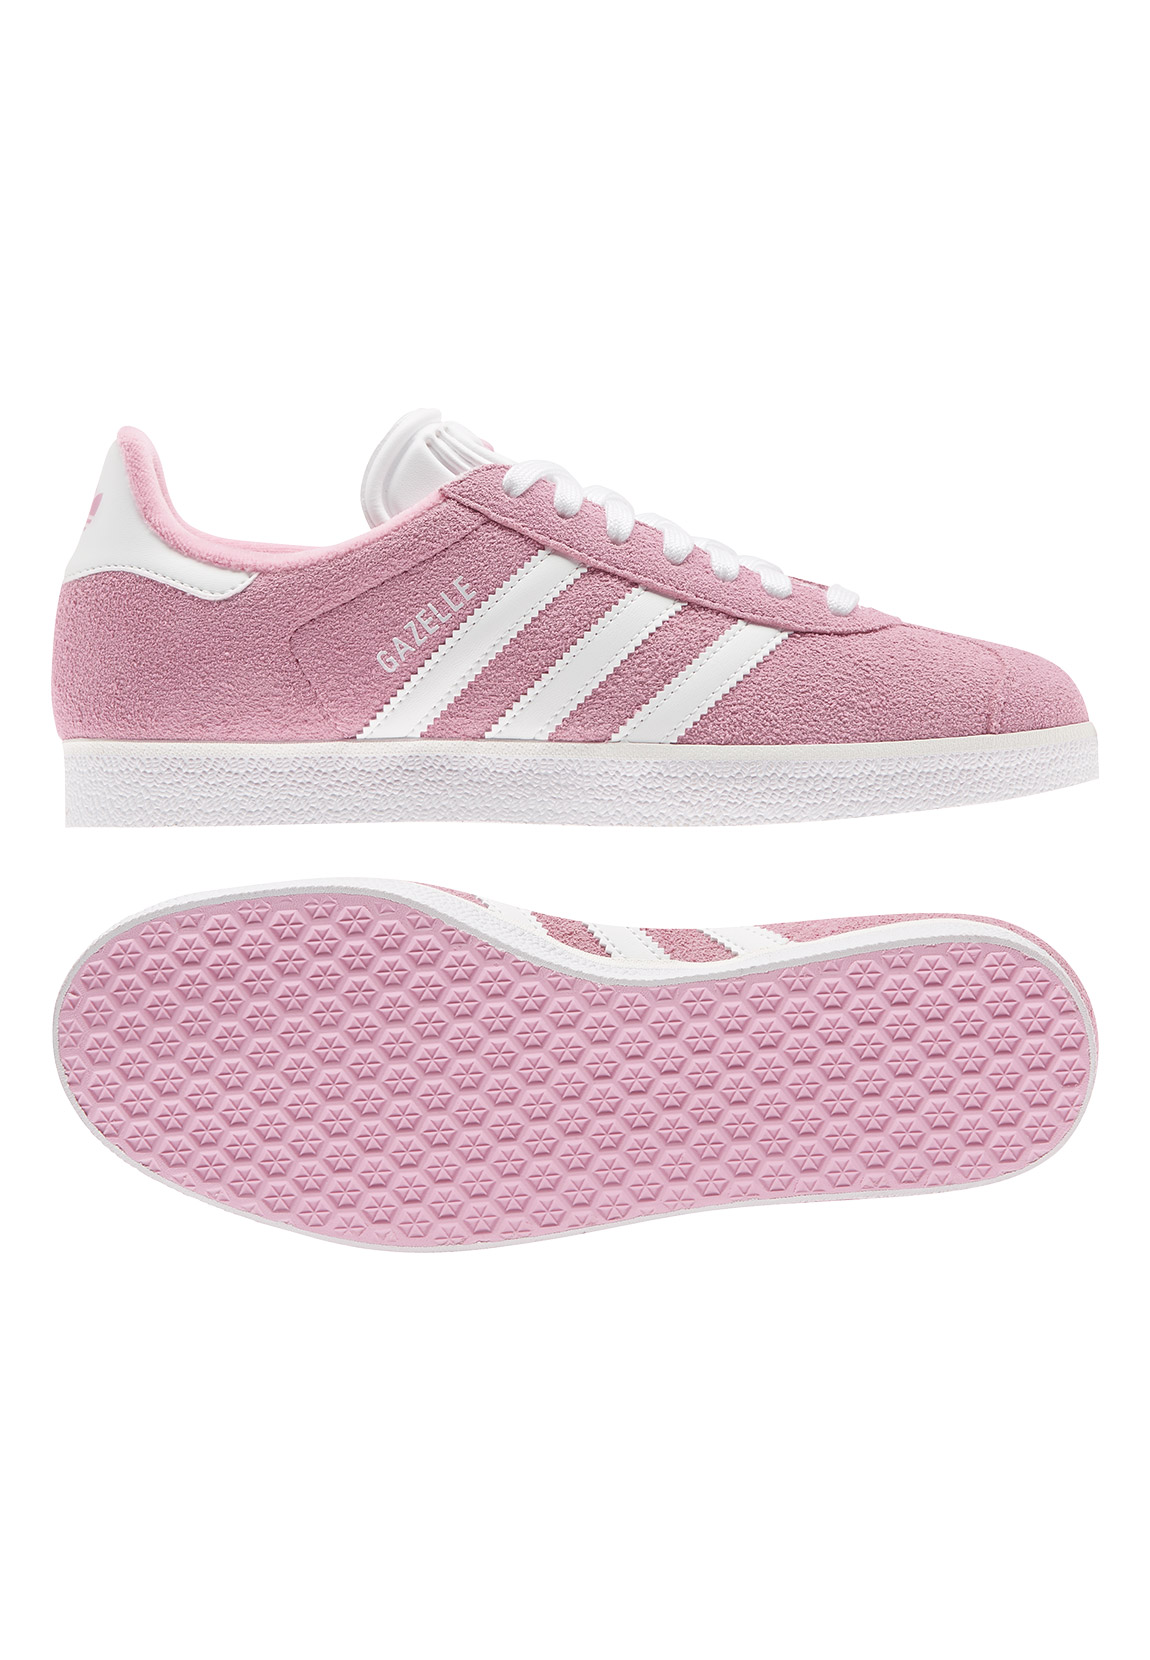 Adidas Originals Gazelle Turnschuhe EU 37 1/3 Light Pink / Core White / Sil günstig online kaufen